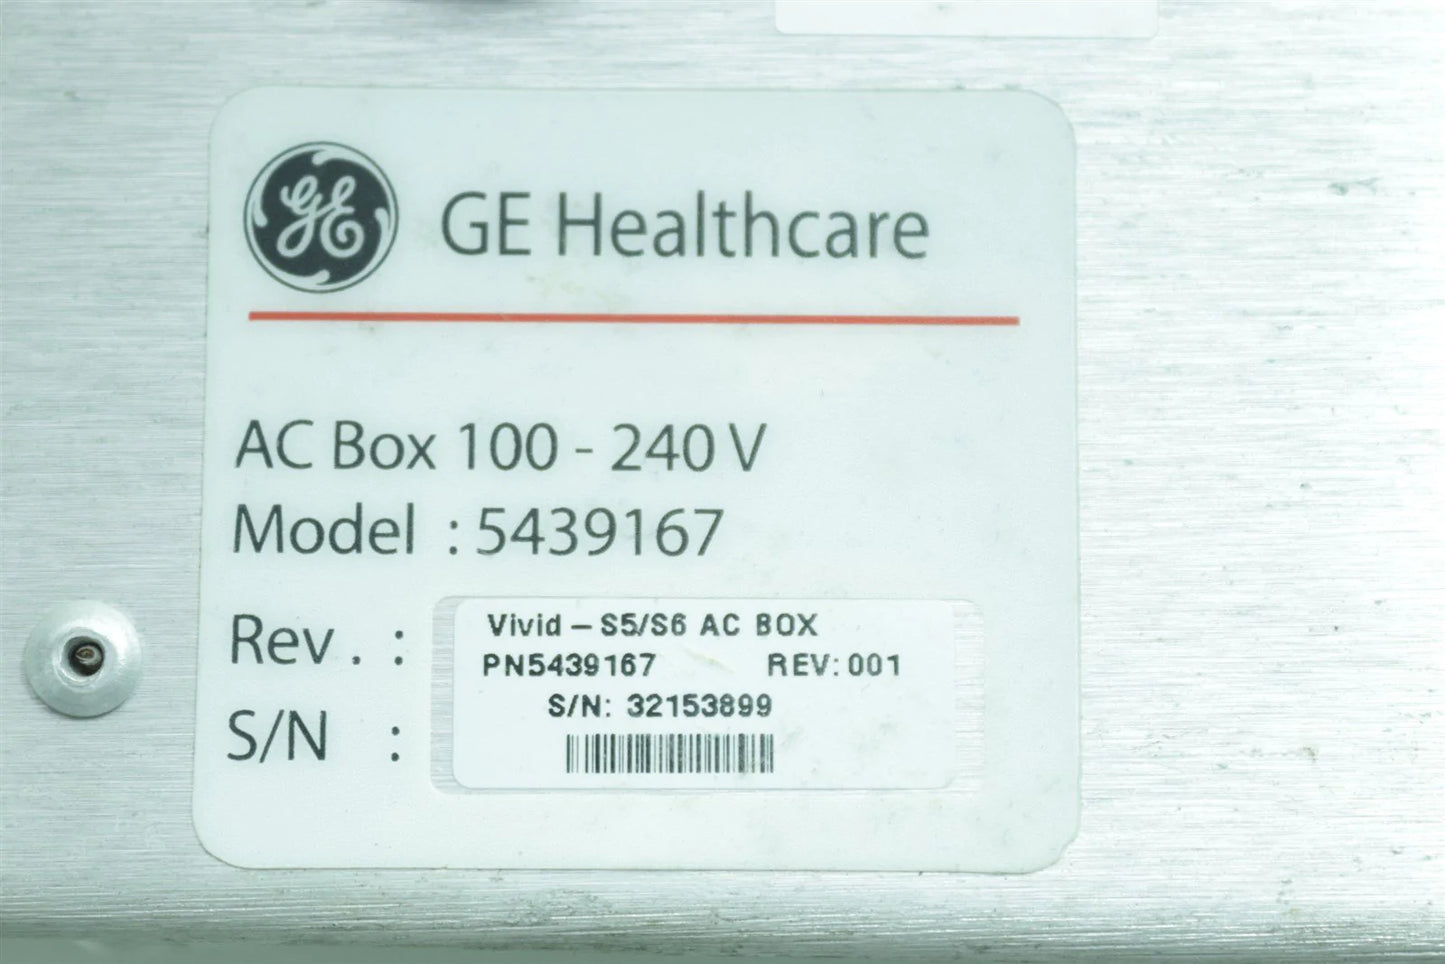 GE HealthCare Vivid S5/S6 Power Supply AC BOX 100-240V 5439167 TESTED